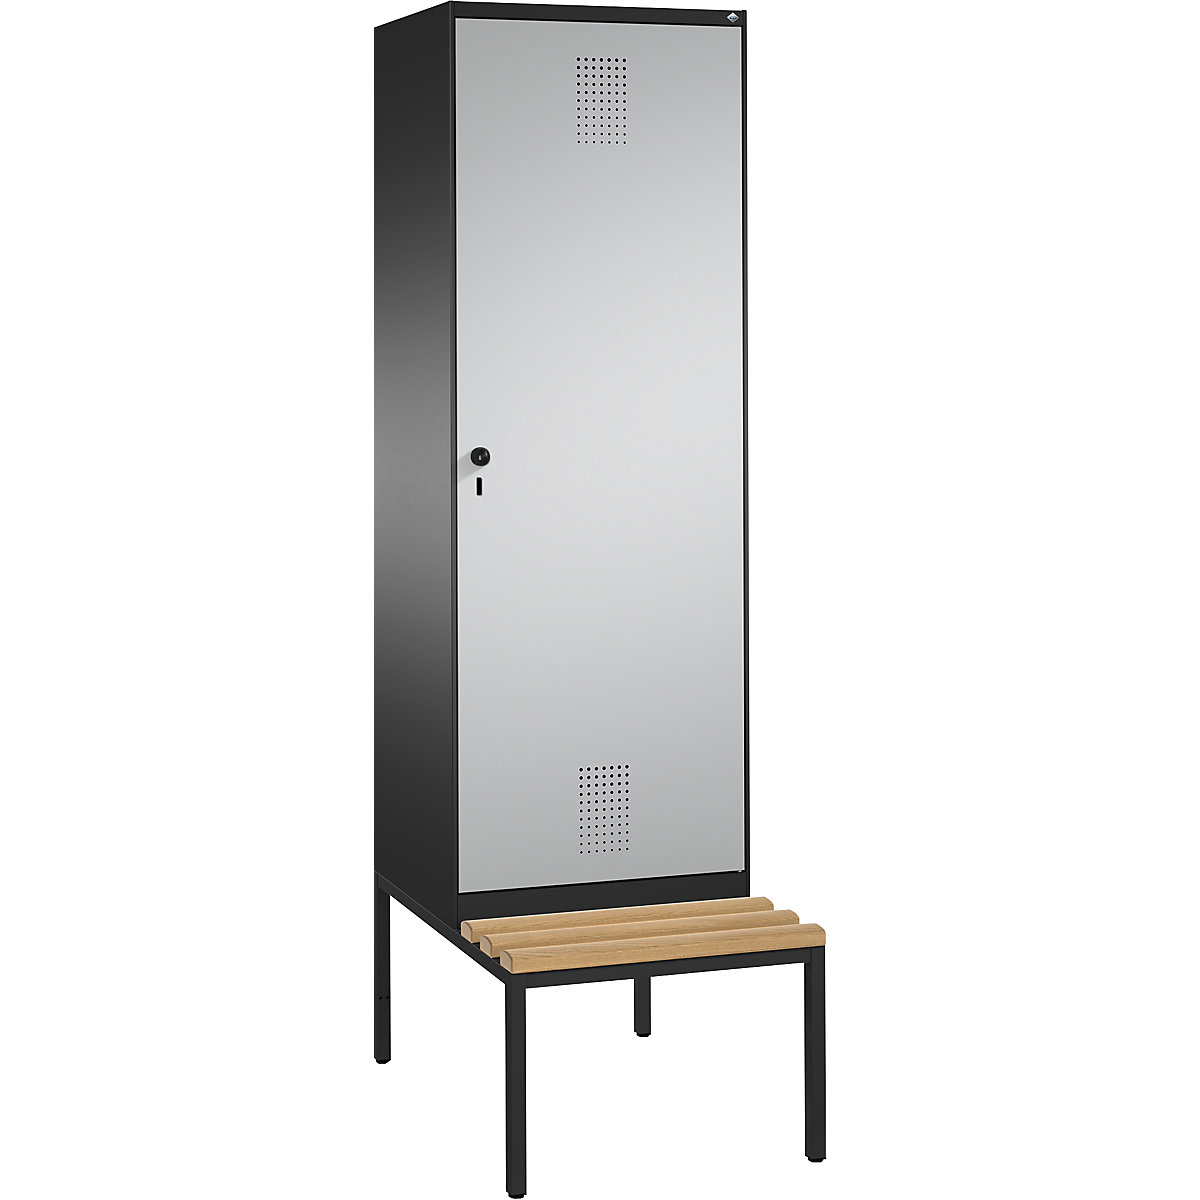 EVOLO cloakroom locker, with bench, door for 2 compartments – C+P, 2 compartments, 1 door, compartment width 300 mm, black grey / white aluminium-16